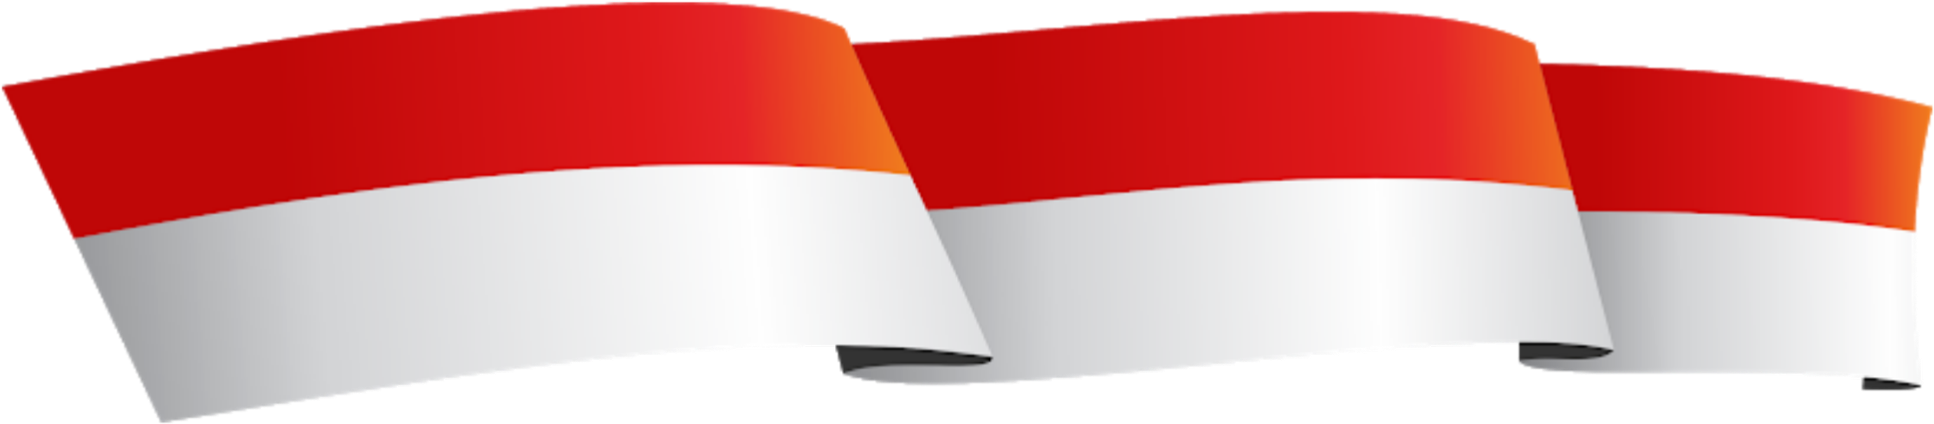 Bendera Indonesia Png Pita Bendera Indonesia Bendera Merah Putih Png